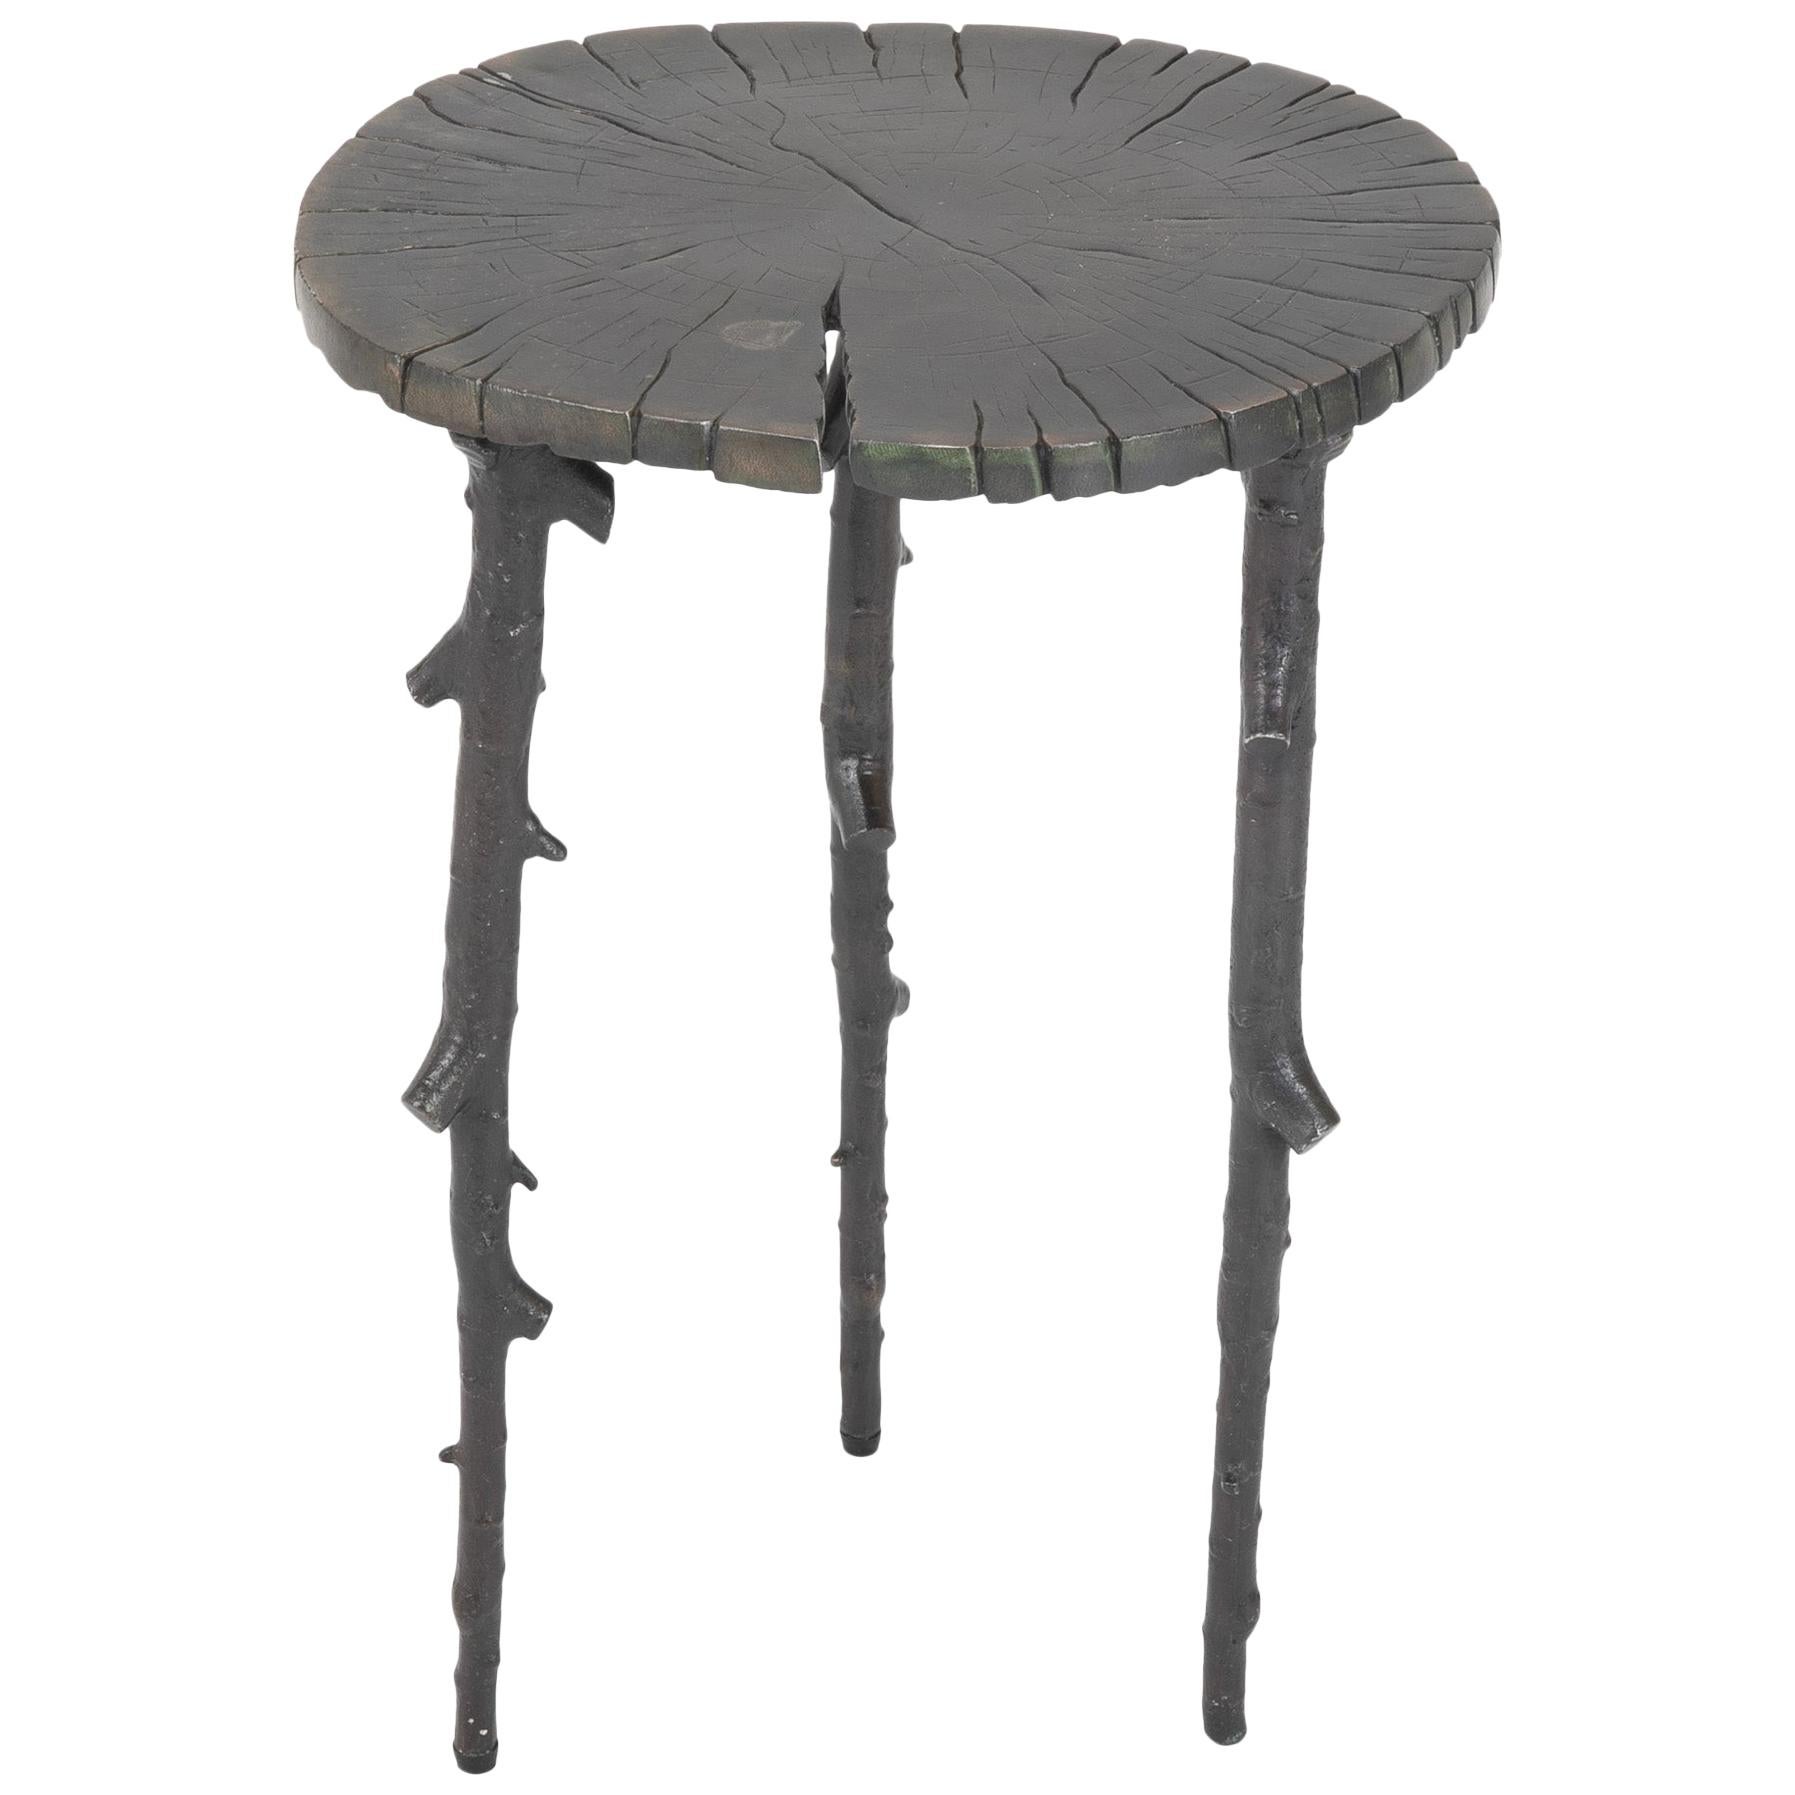 Original Michael Aram "Enchanted Forest" Patinated Aluminum Side Table